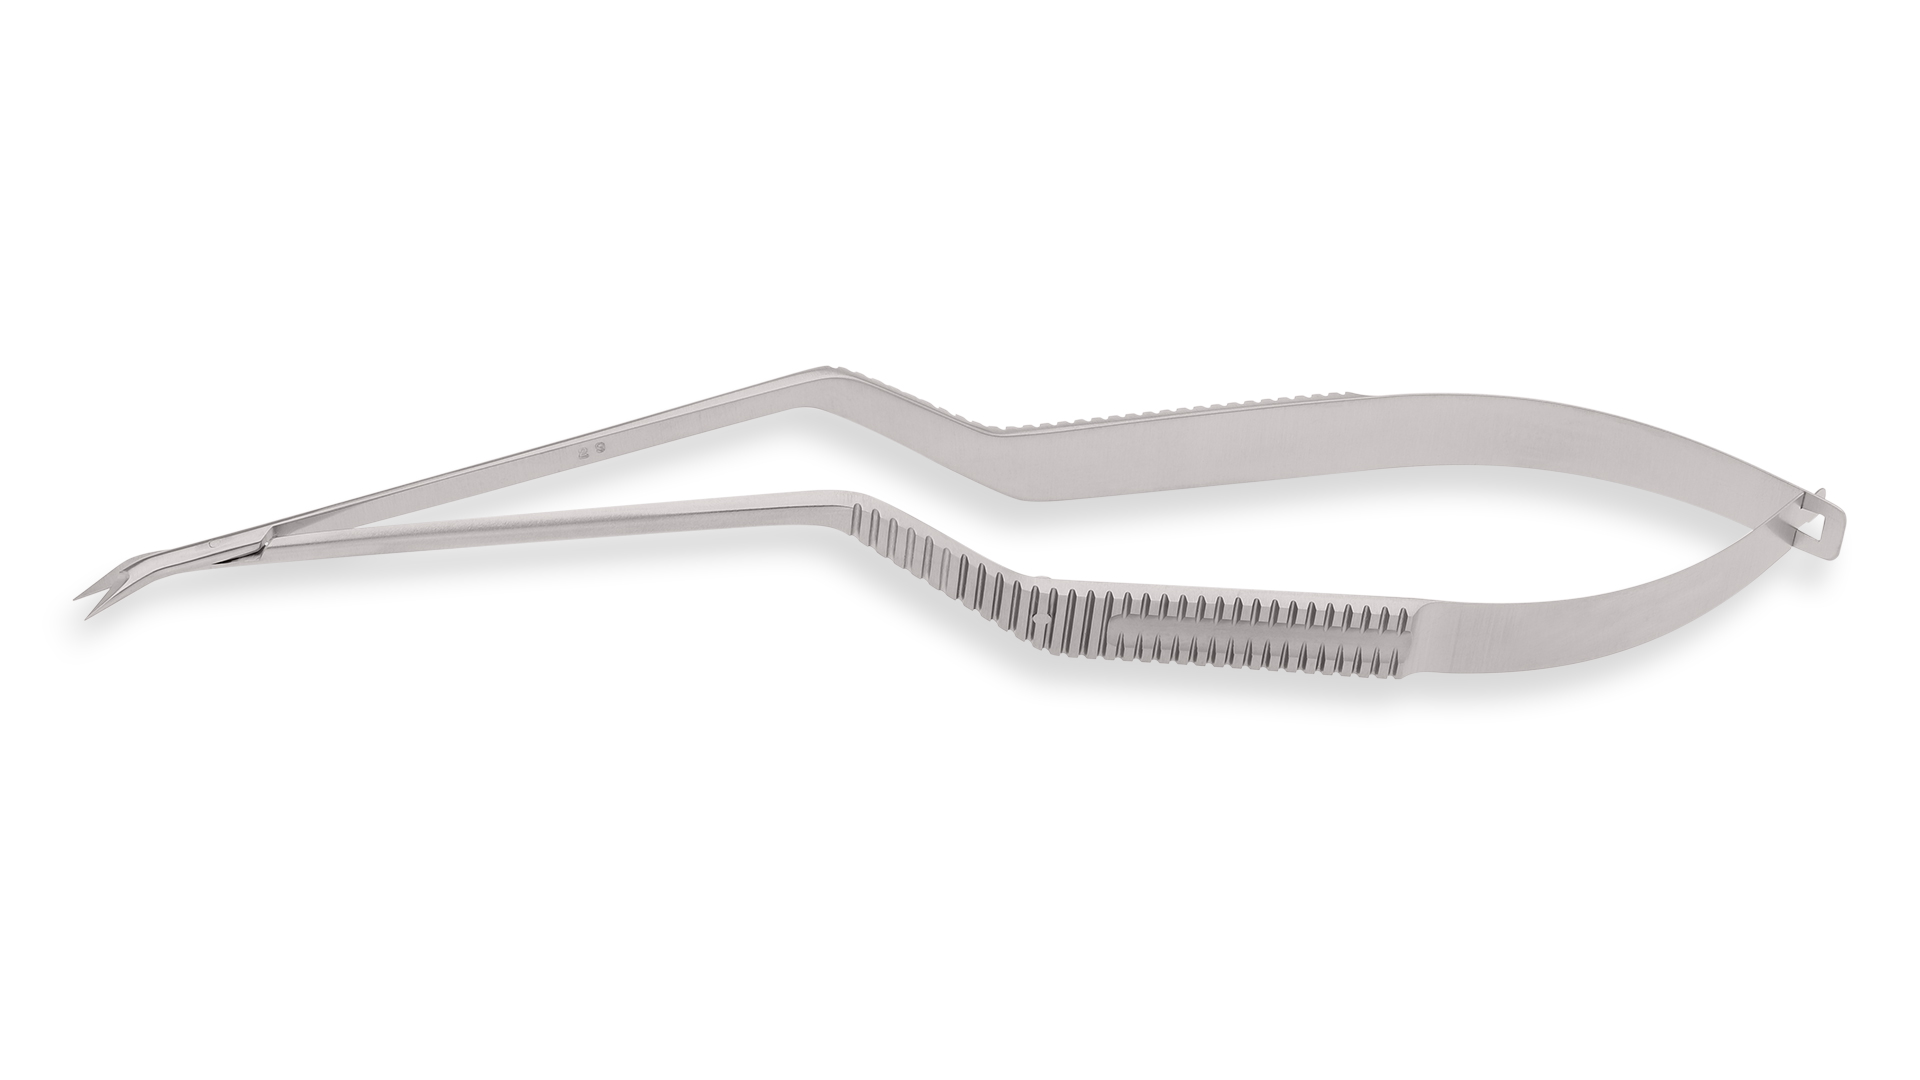 Wexler Surgical - Baby Metzenbaum Scissors - Curved Blade